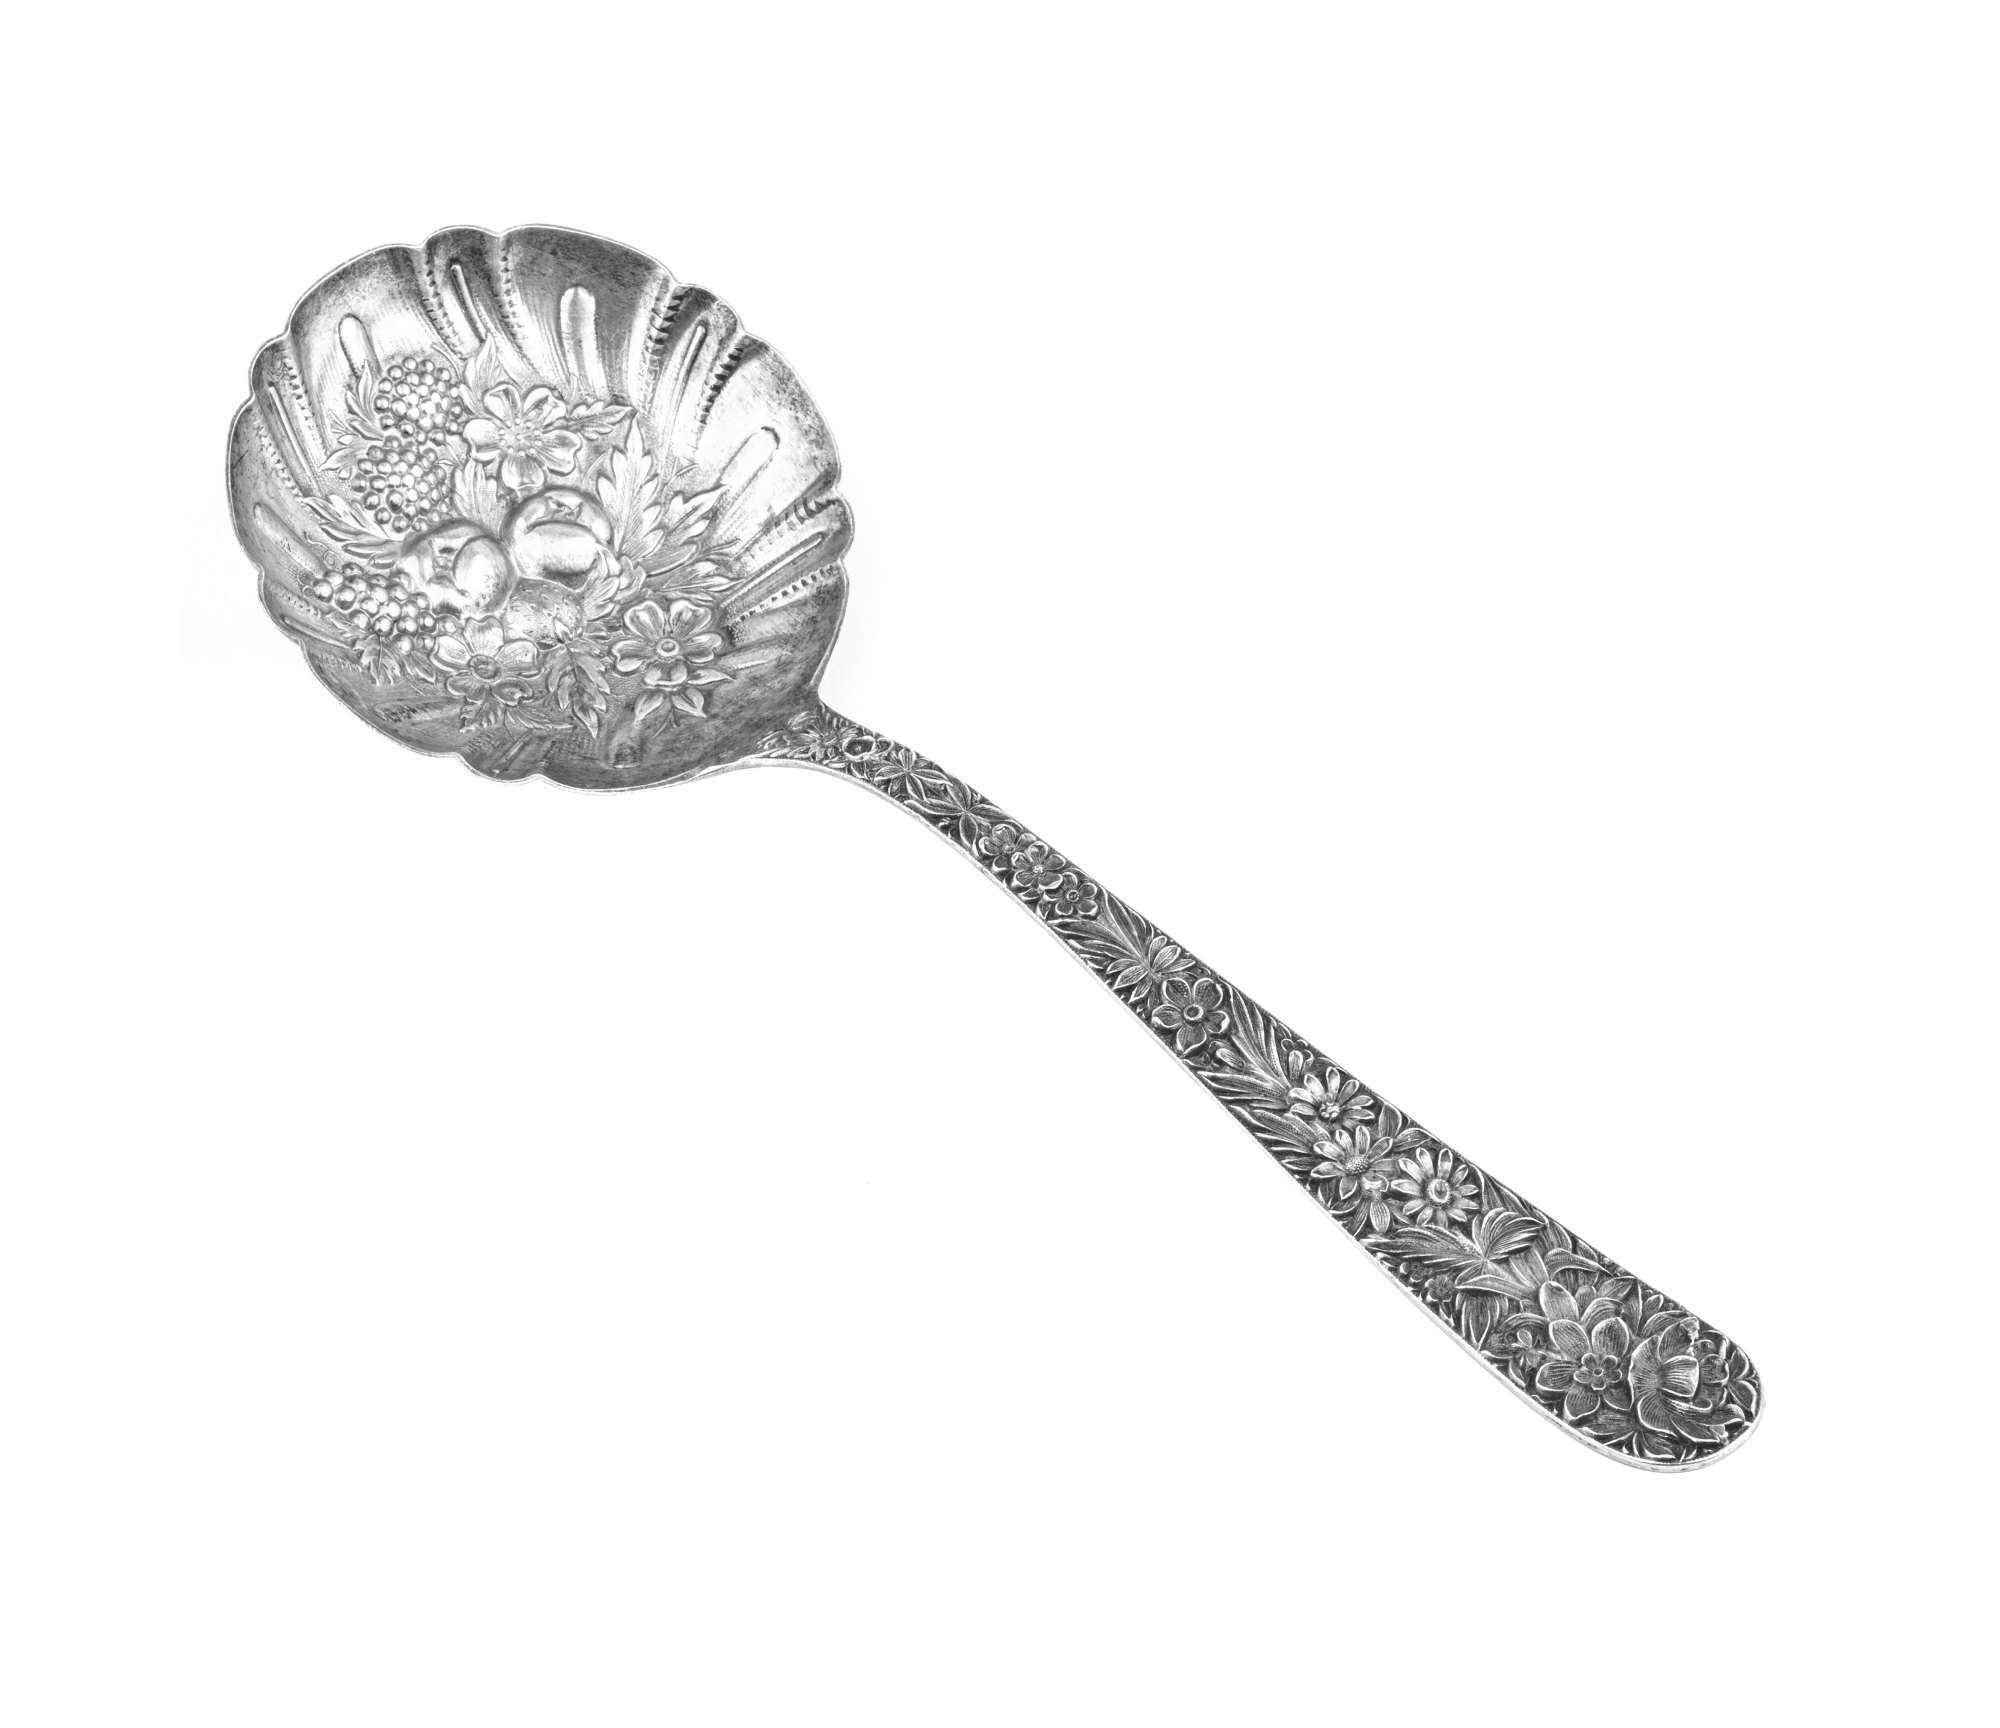 Repousse Serving Spoon